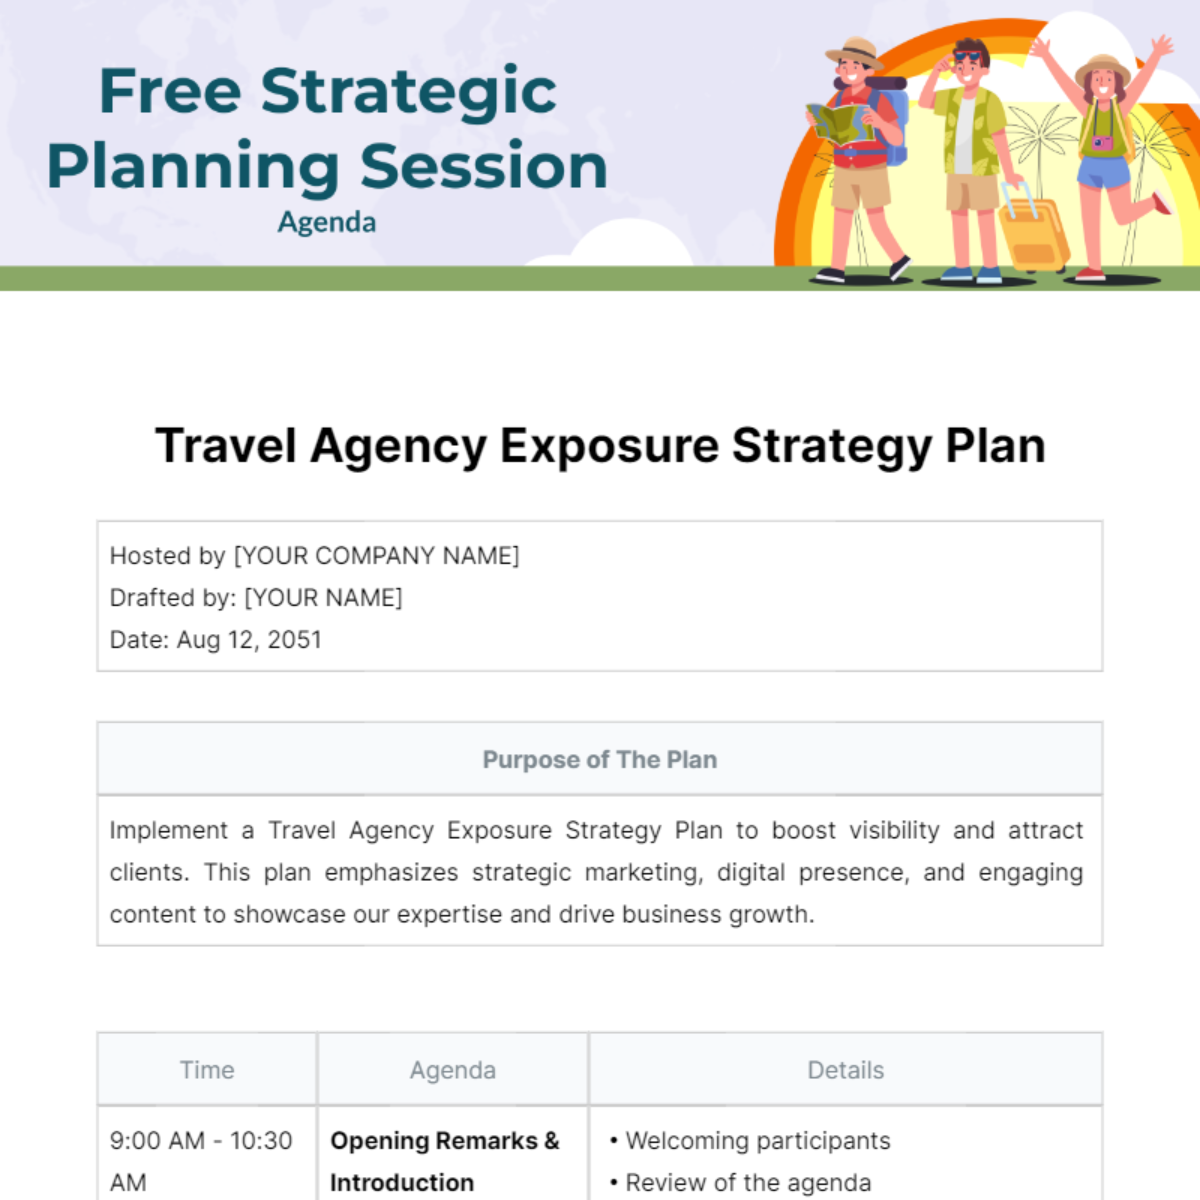 Free Strategic Planning Session Agenda Template